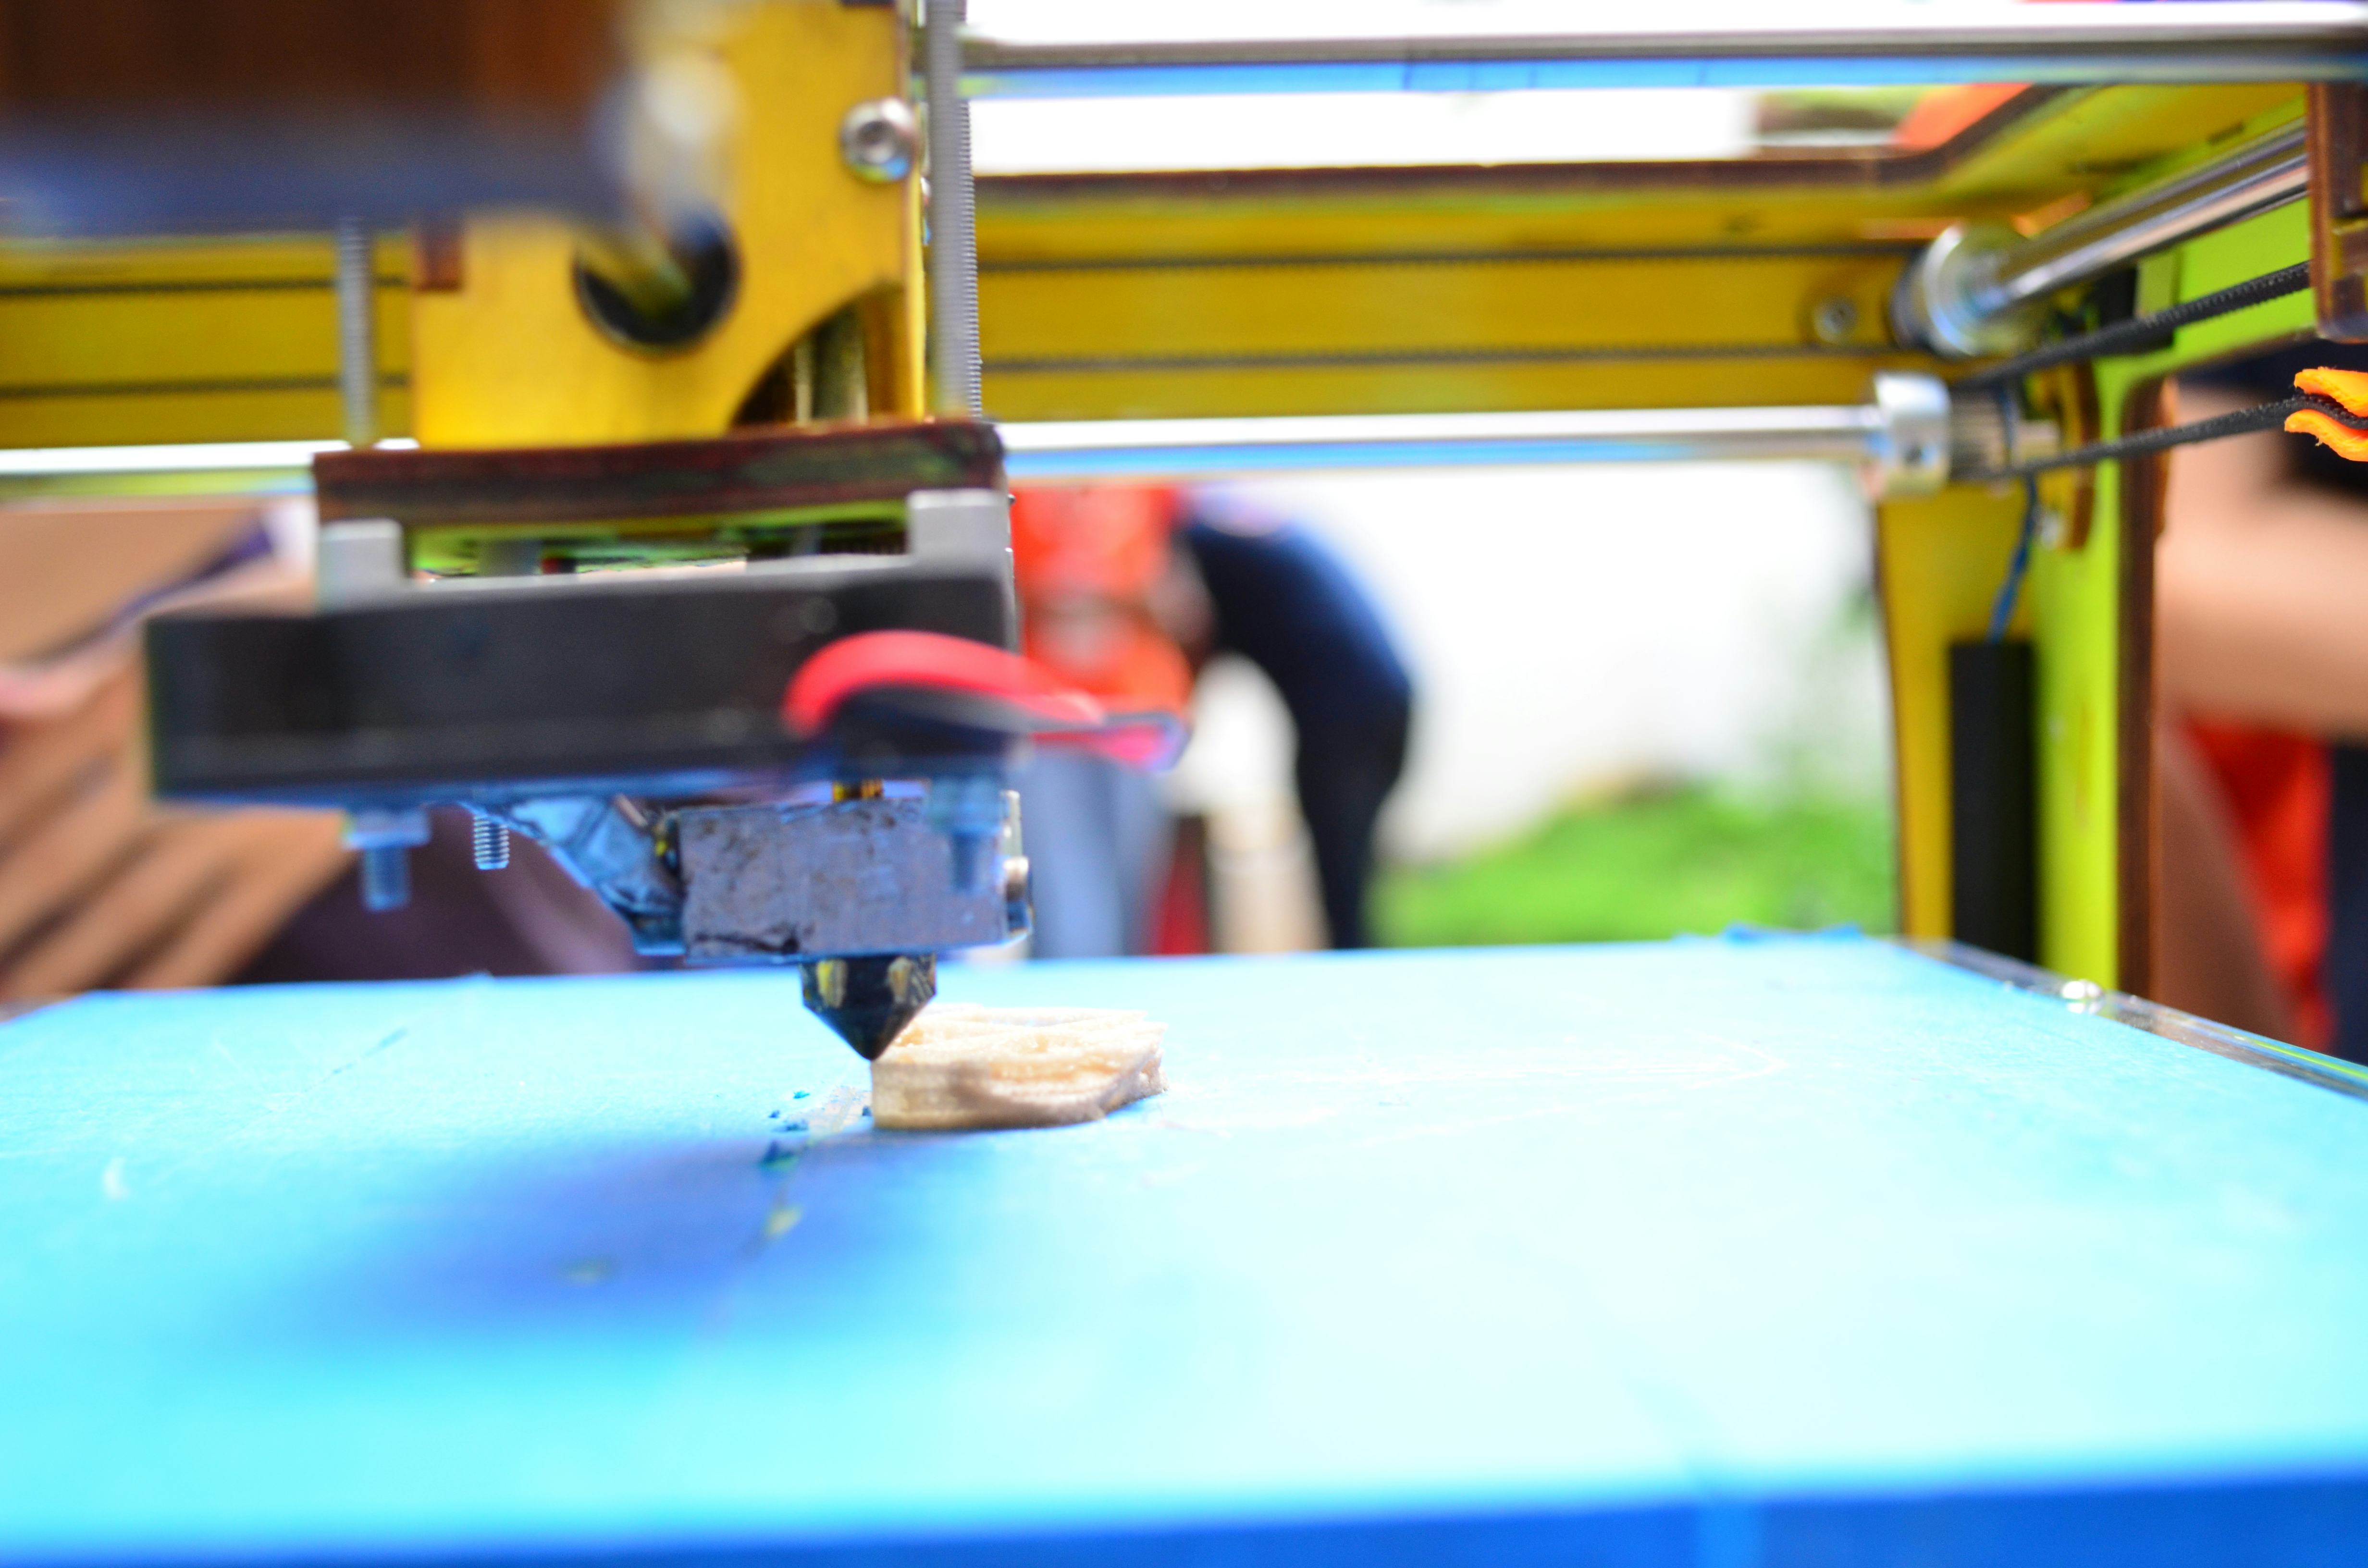 '3D printing raakt Nederlandse logistiek hard'